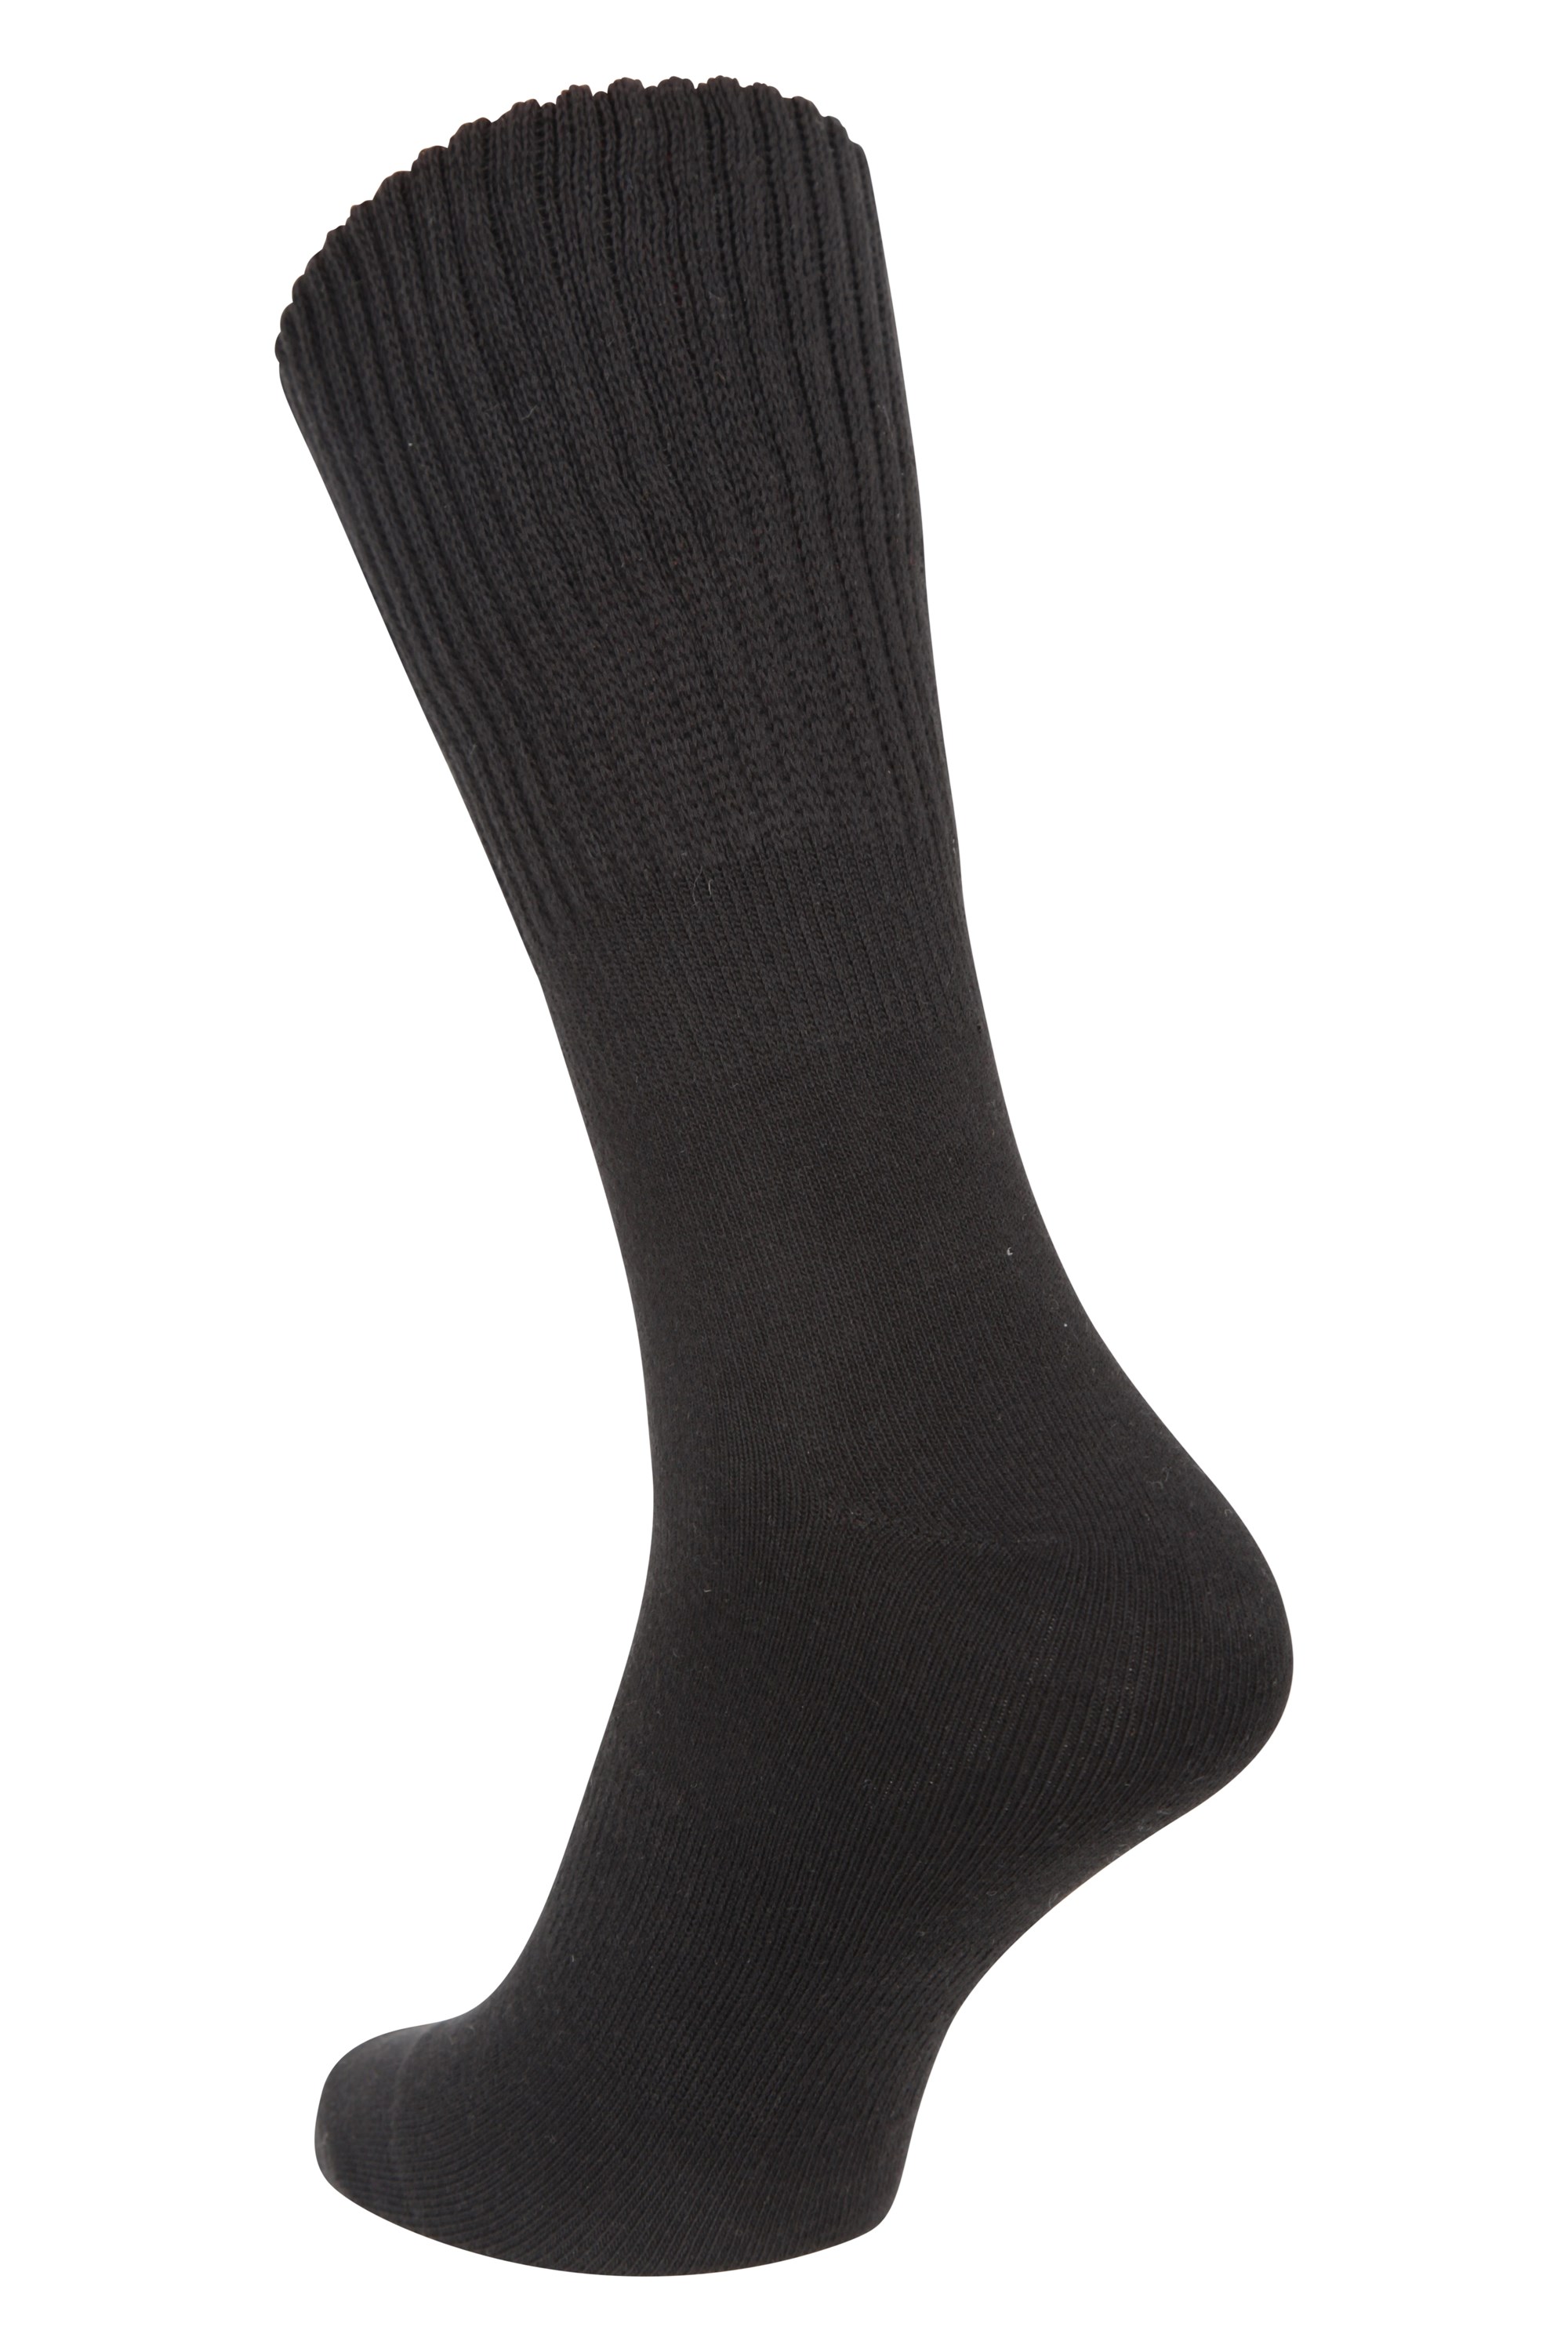 Mountain Warehouse Uni  Extreme Comfort Walking Sock In Black 7-11 